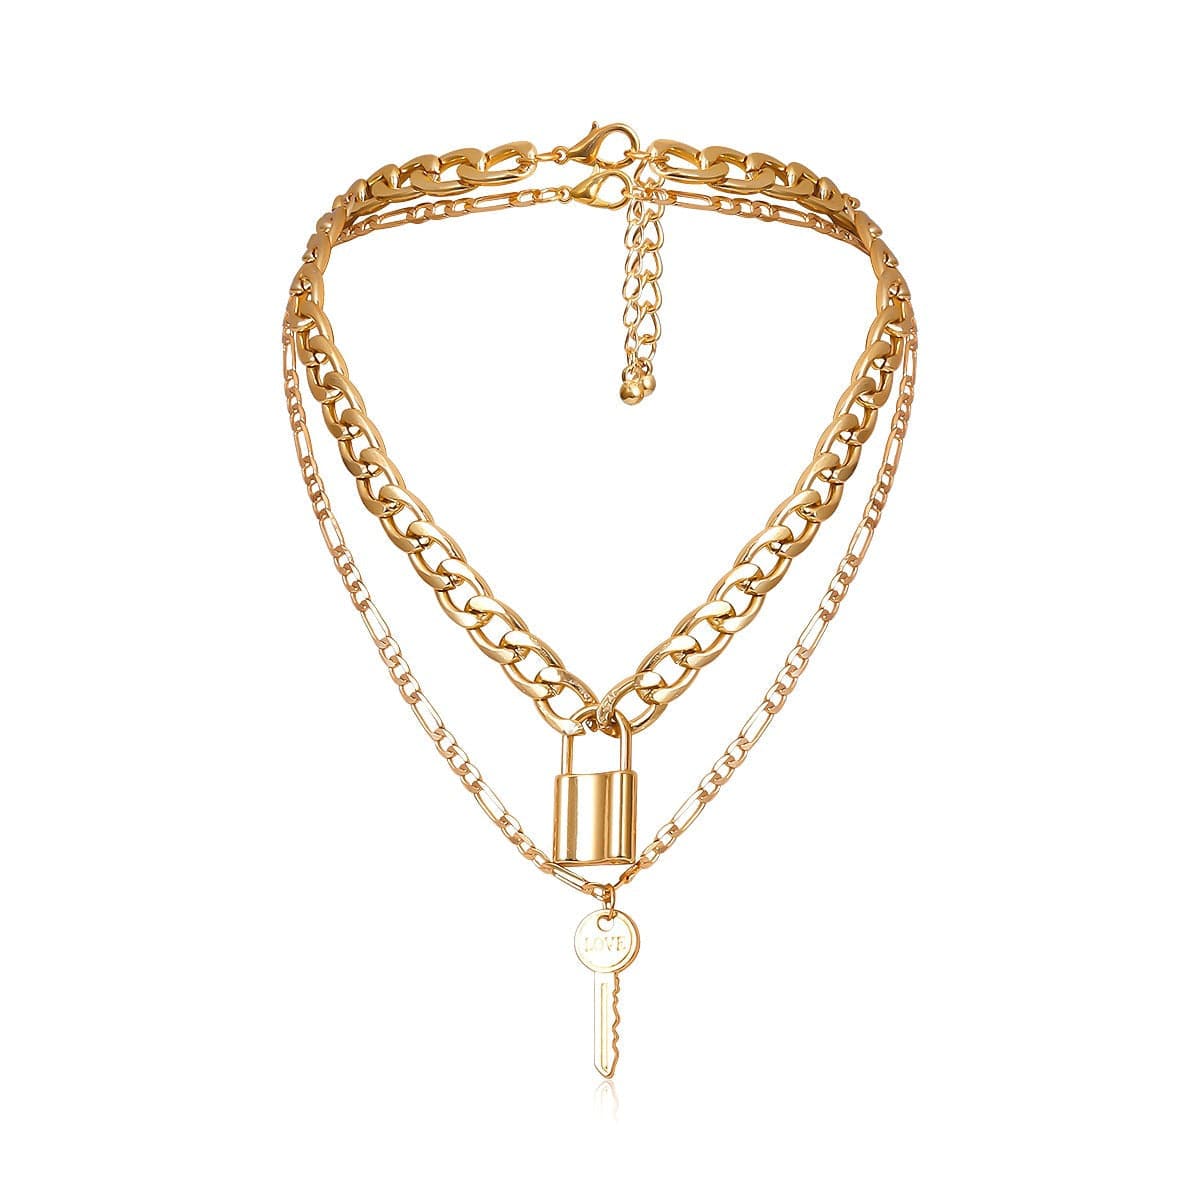 18K Gold-Plated Lock & Key Pendant Necklace Set